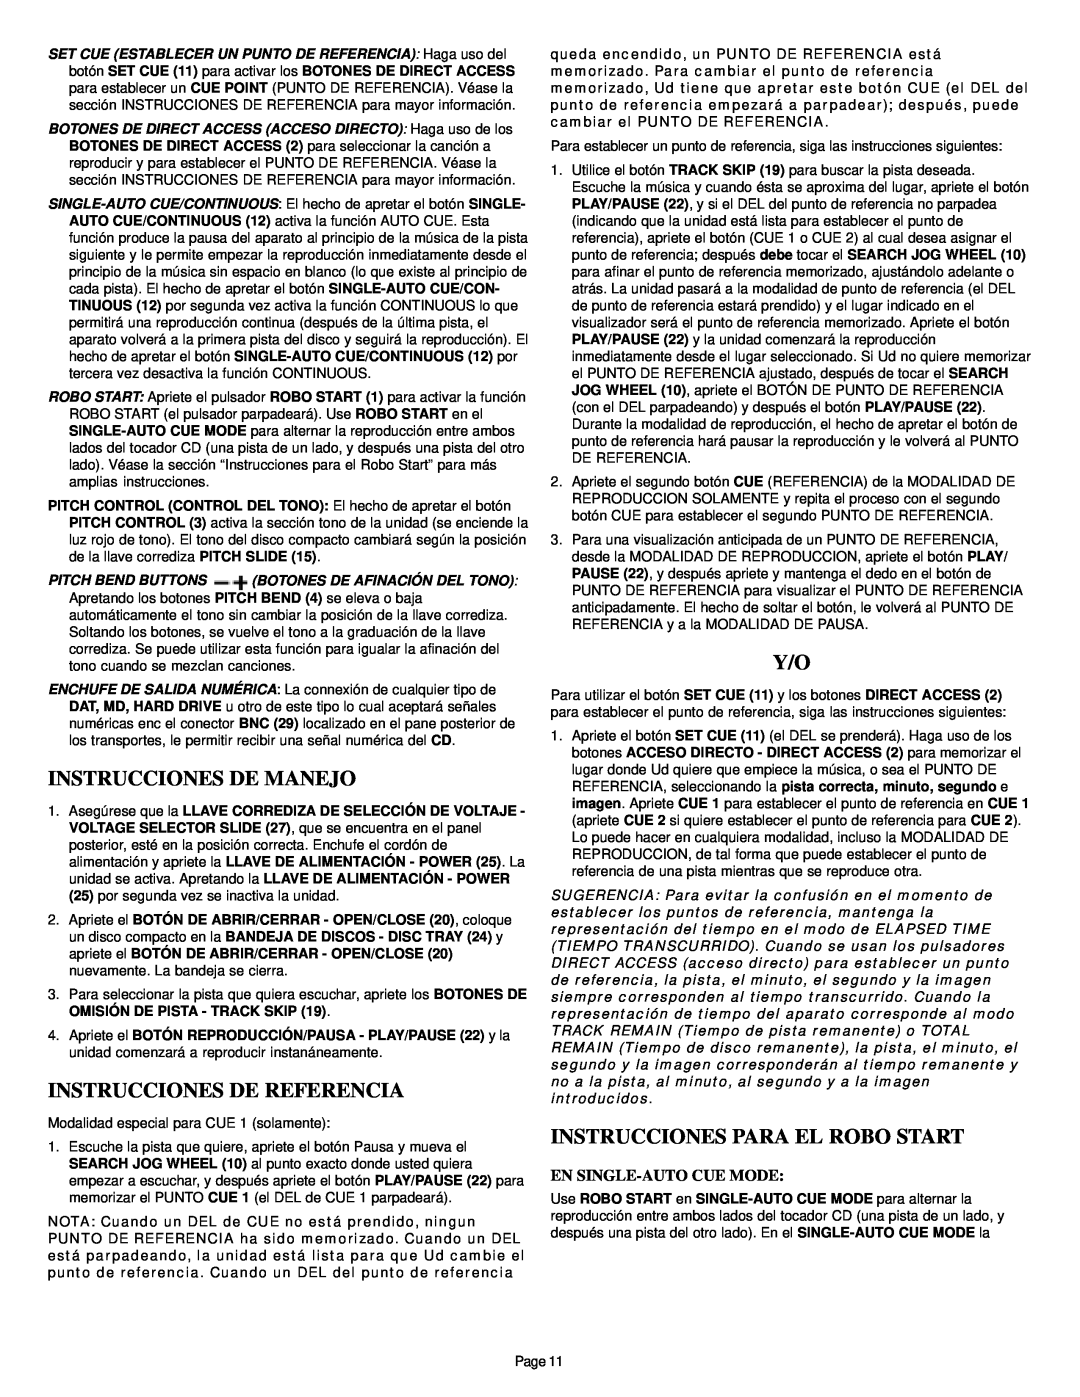 Gemini CDS-2000 manual Instrucciones De Manejo, Instrucciones De Referencia, Instrucciones Para El Robo Start 